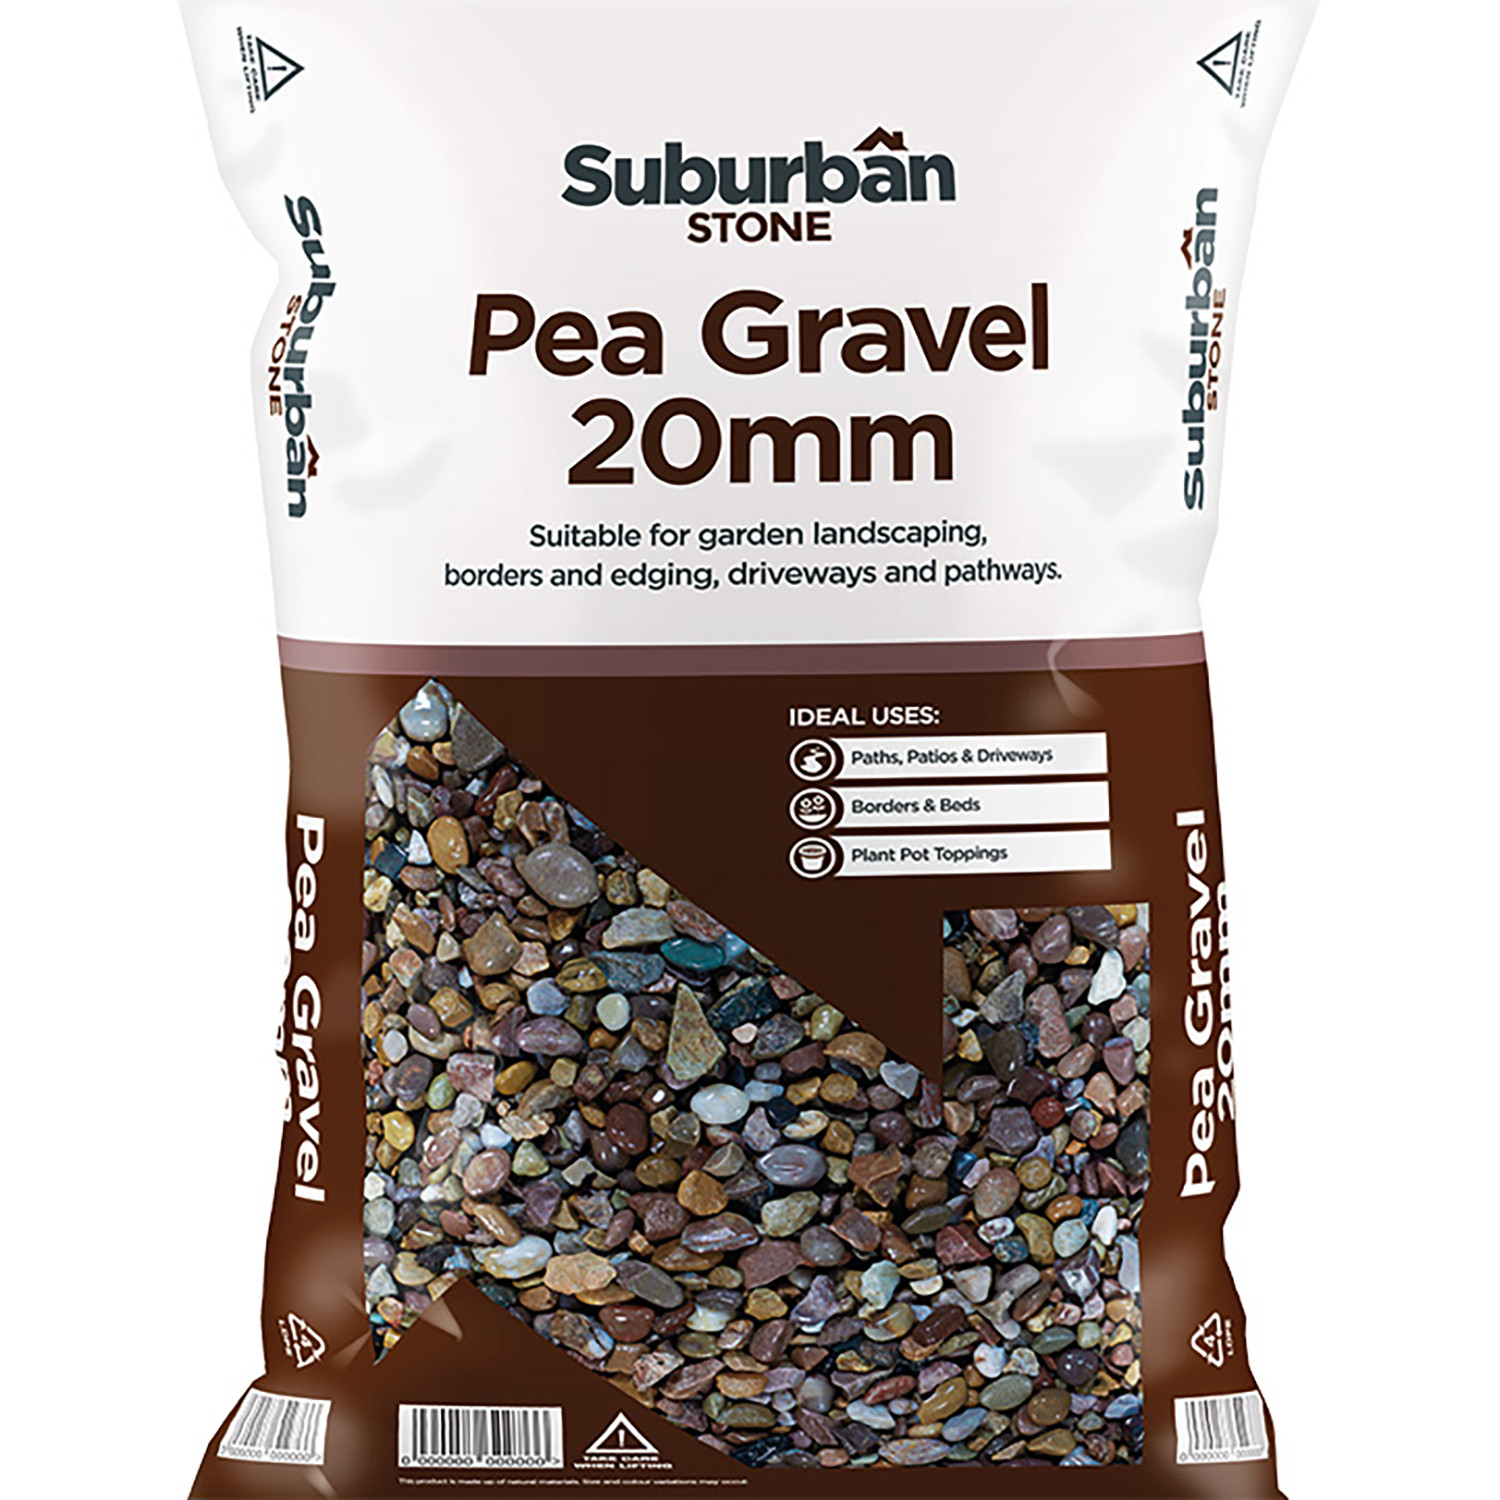 Suburban Stone Pea Gravel Chippings 20mm 20kg Image